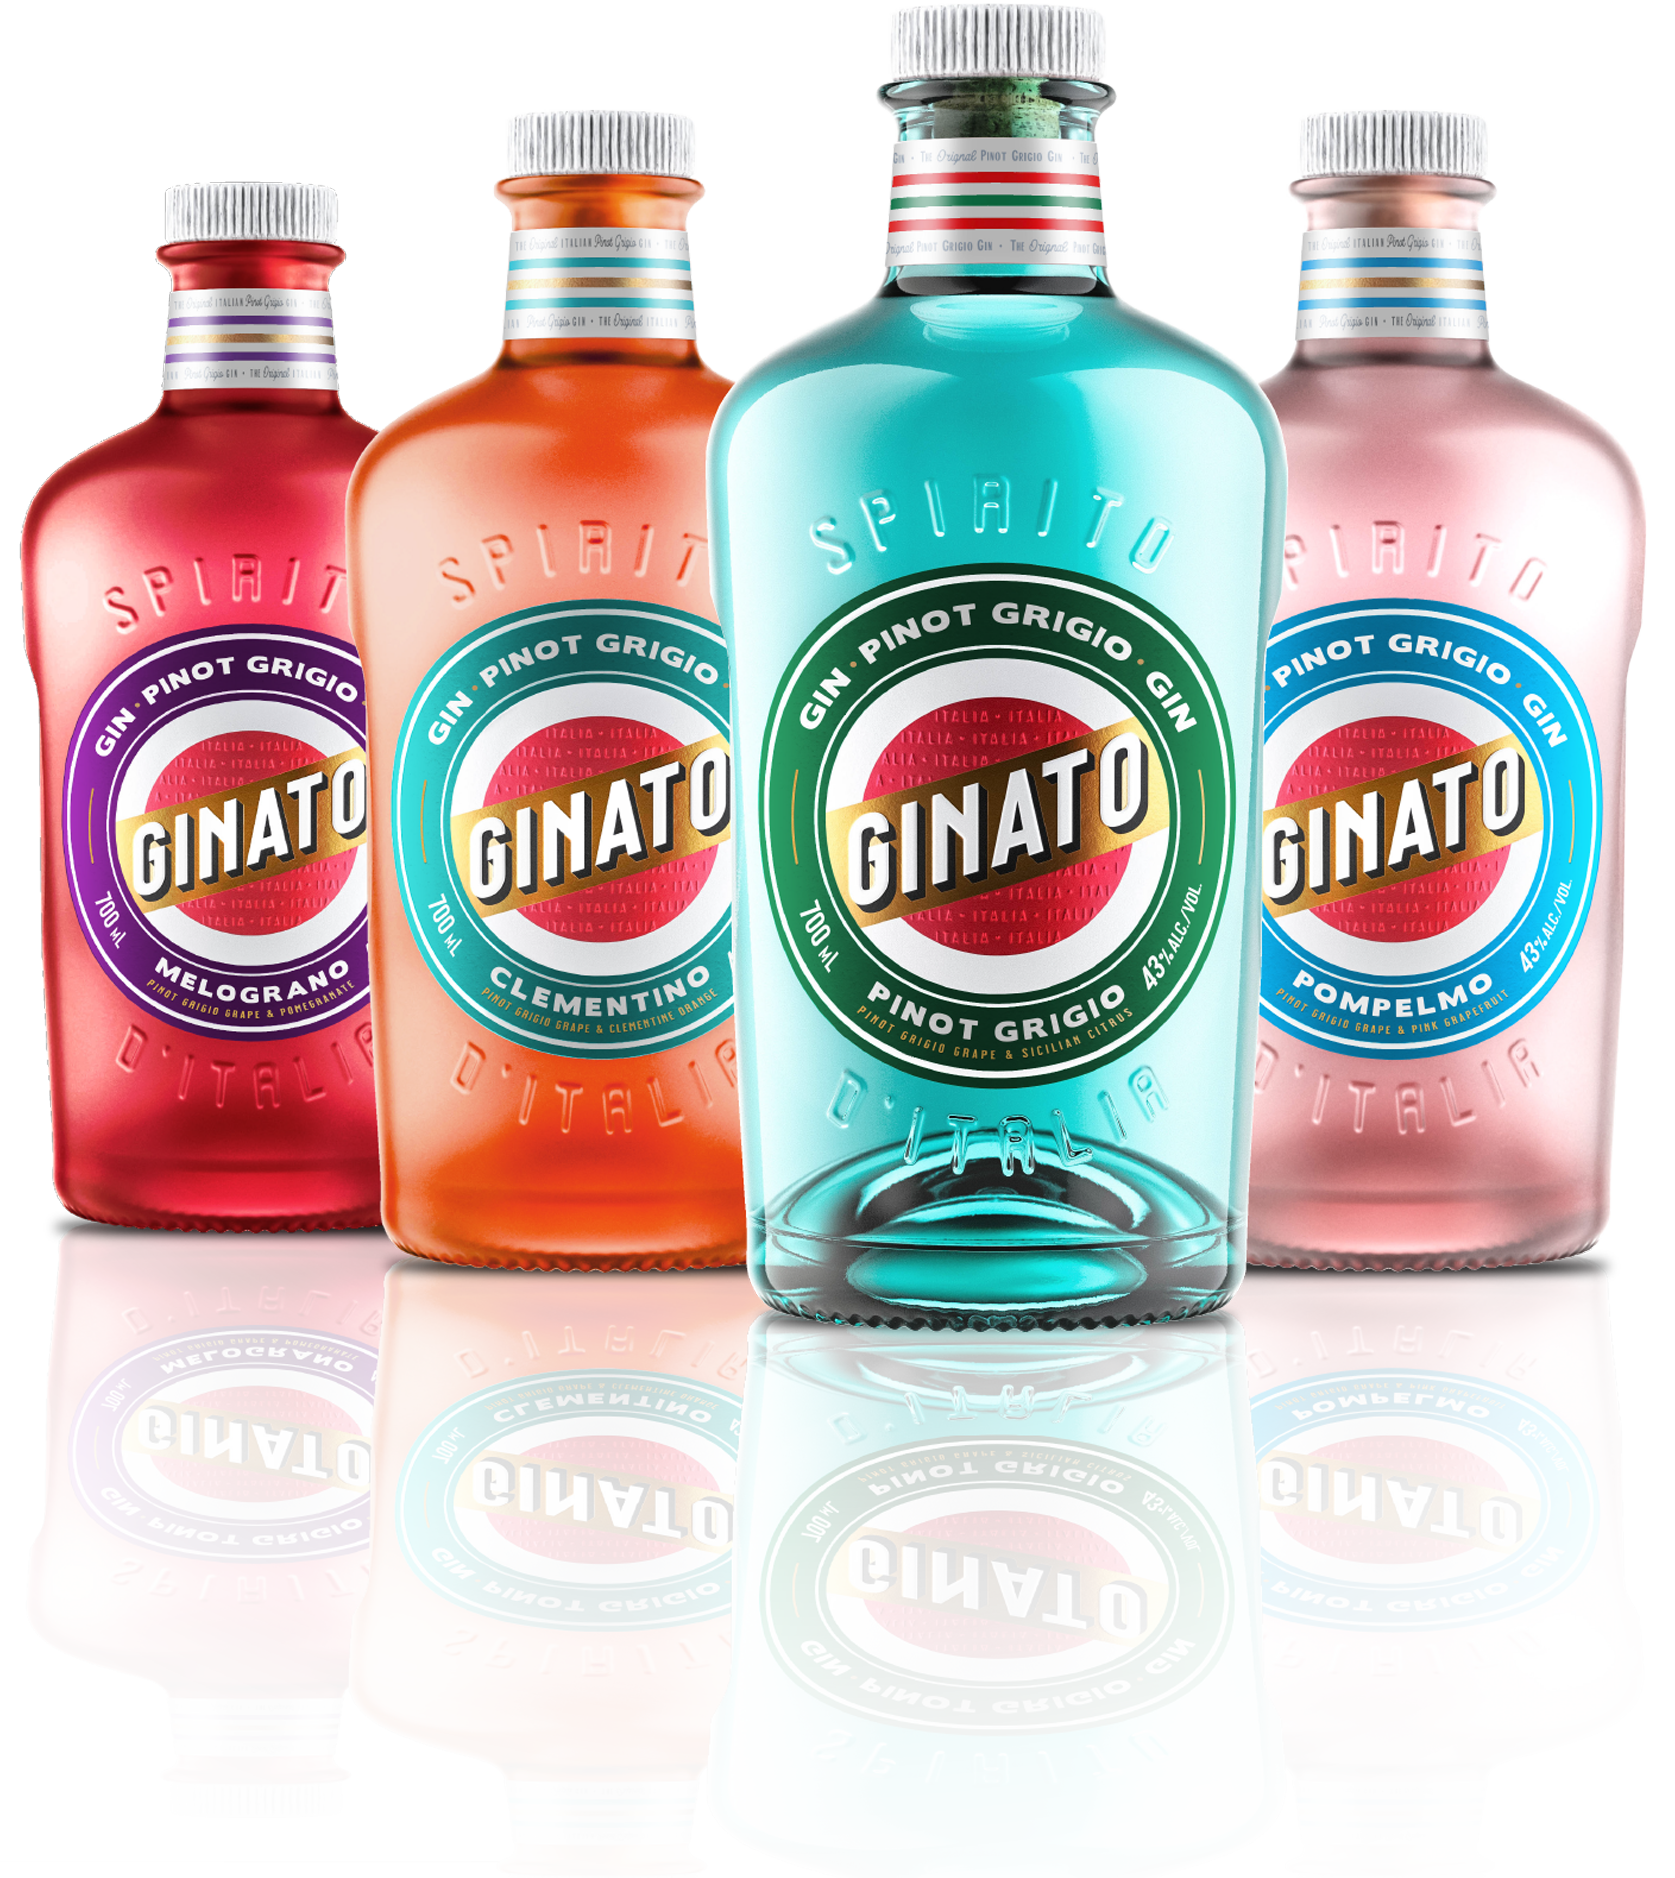 Ginato Gin bottles